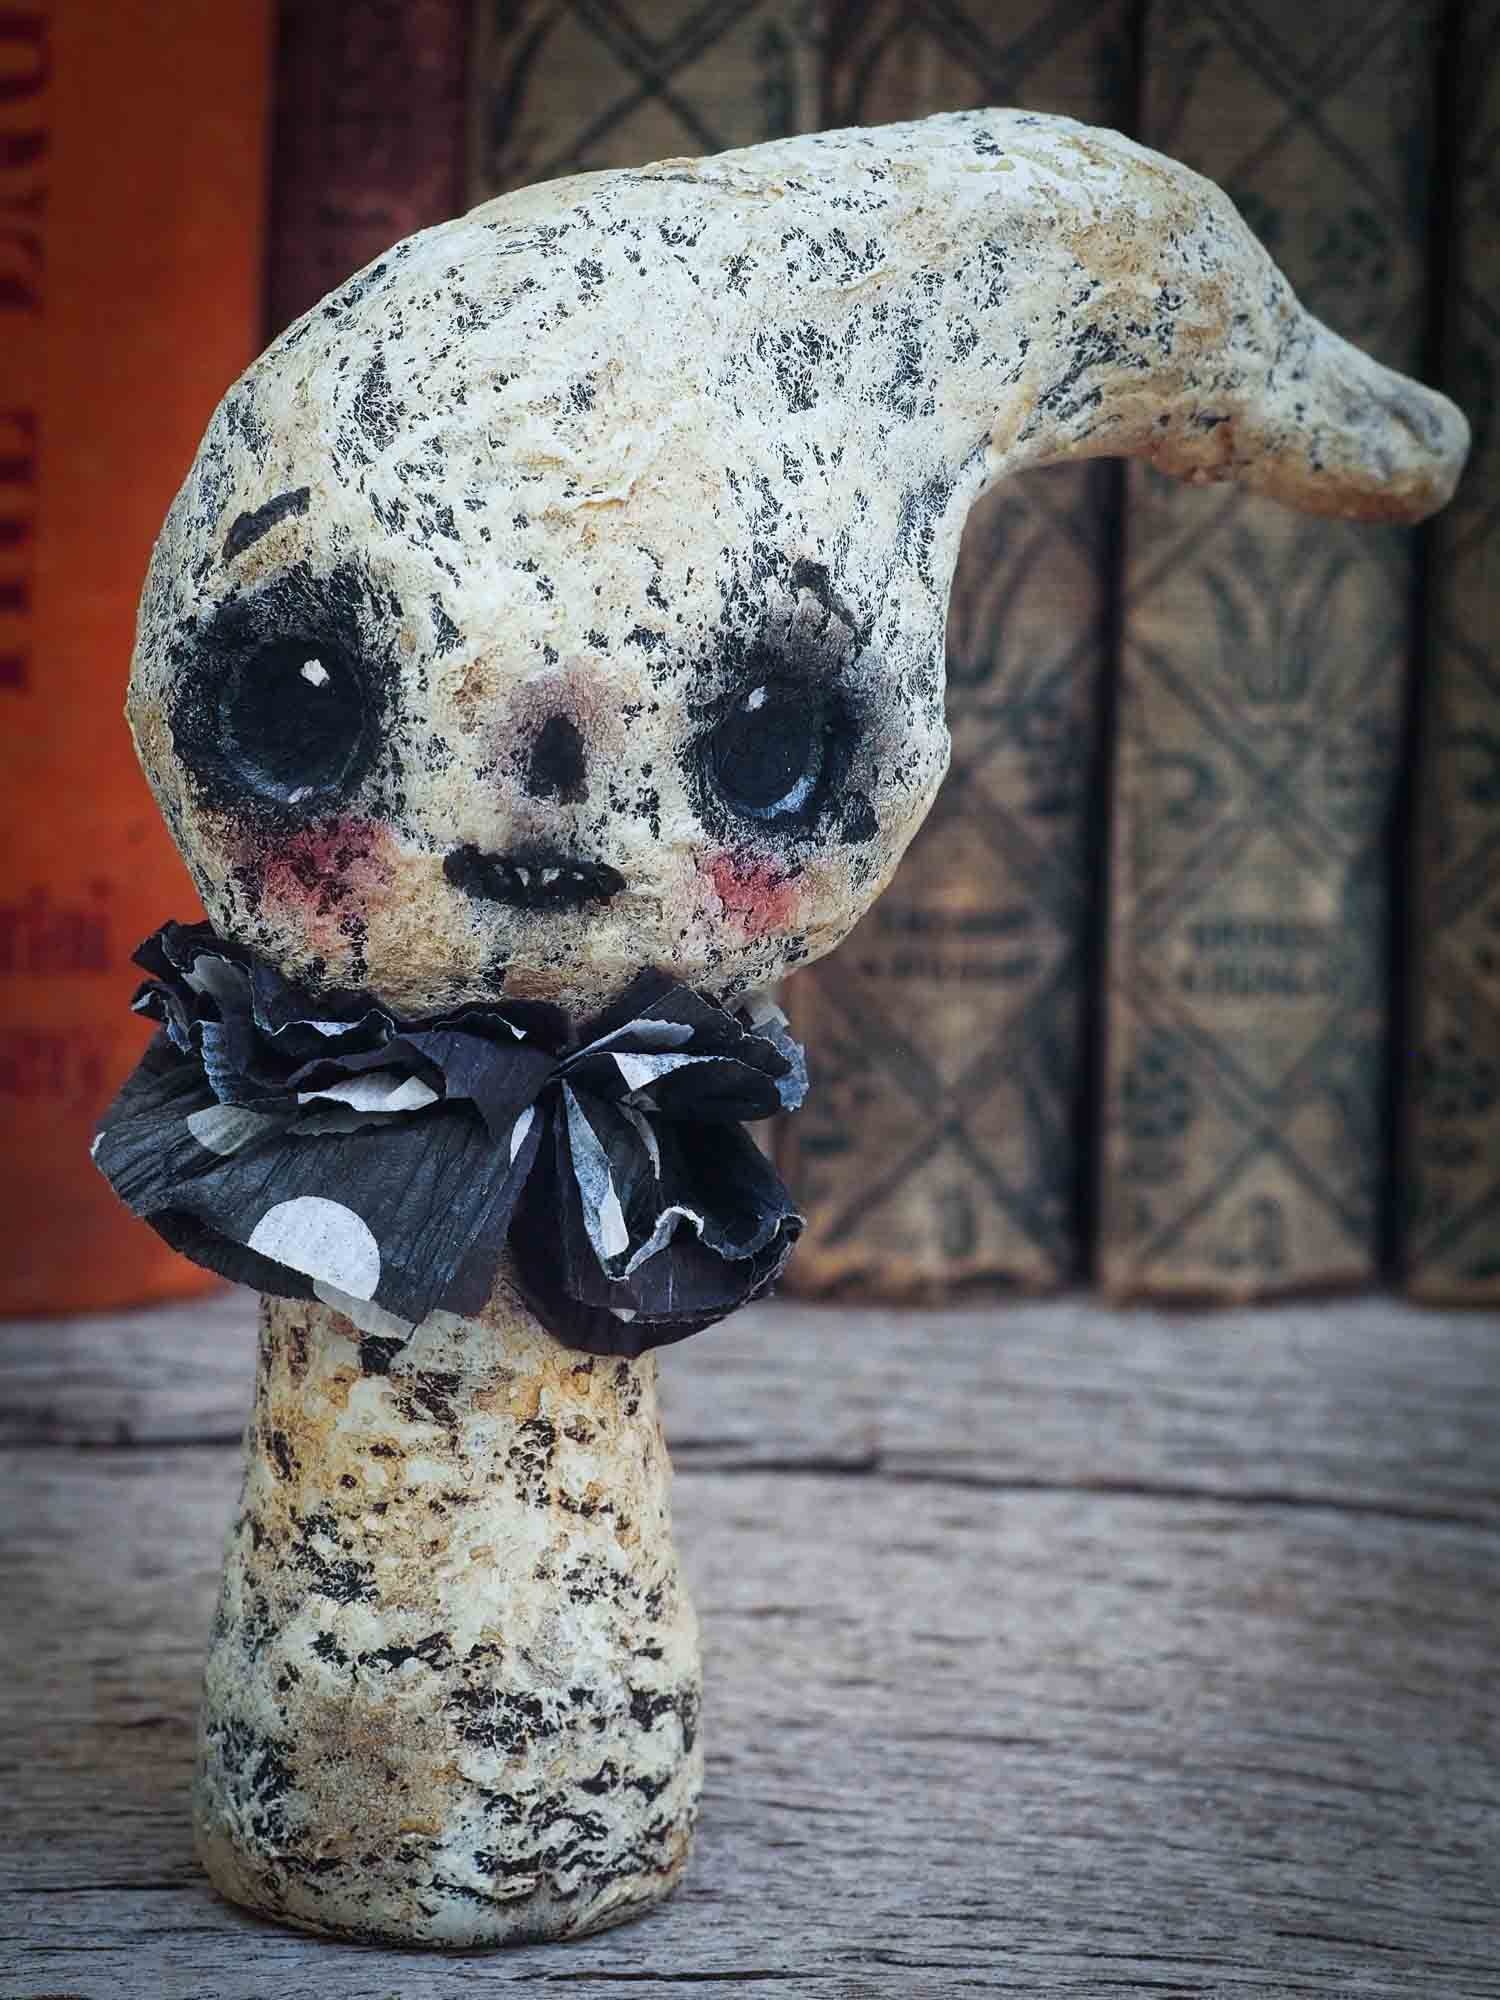 A super cute ghost ghoul Halloween mini figurine by Danita. This folk art and crafts mini art doll is kawaii kokeshi in style, handmade for Halloween home decor decorations by Danita Art.